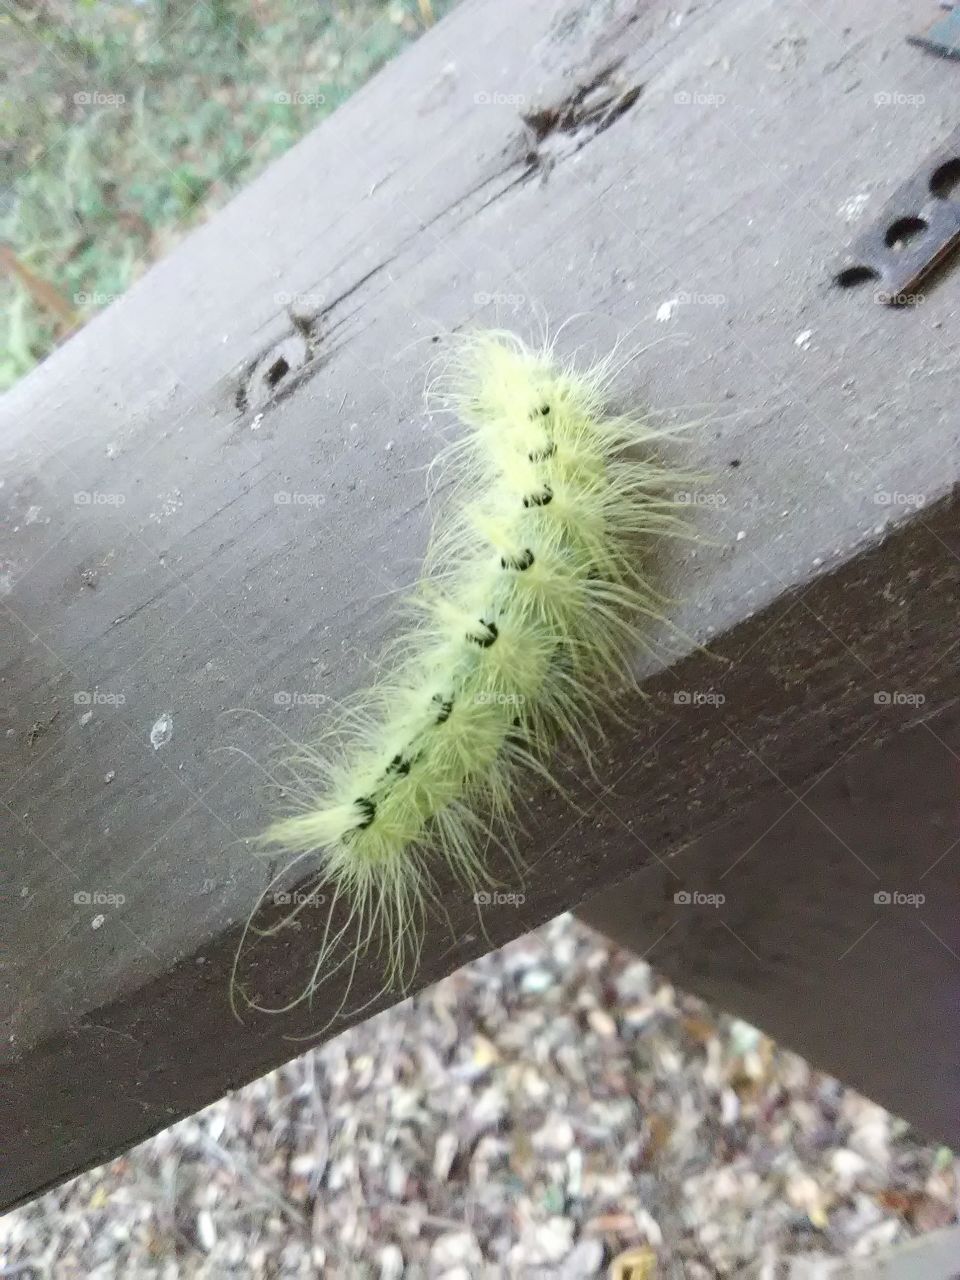 fuzzy yellow caterpillar